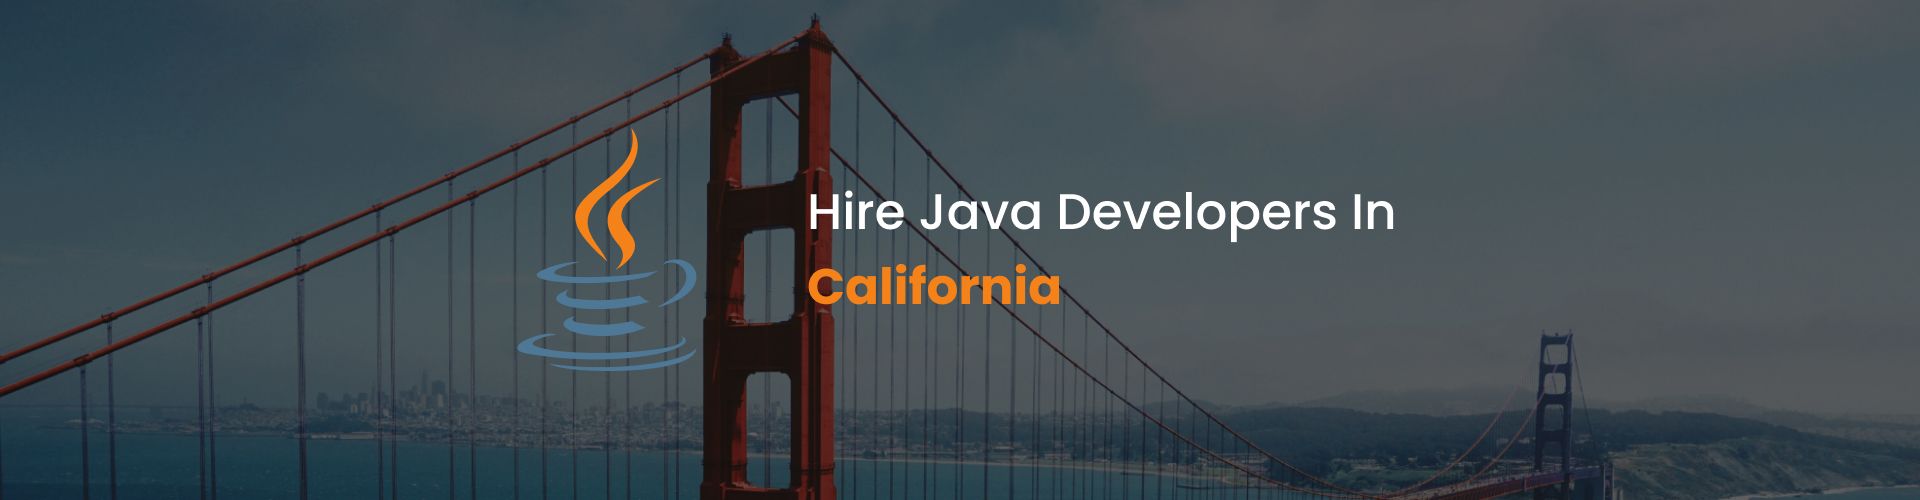 hire java developers in california